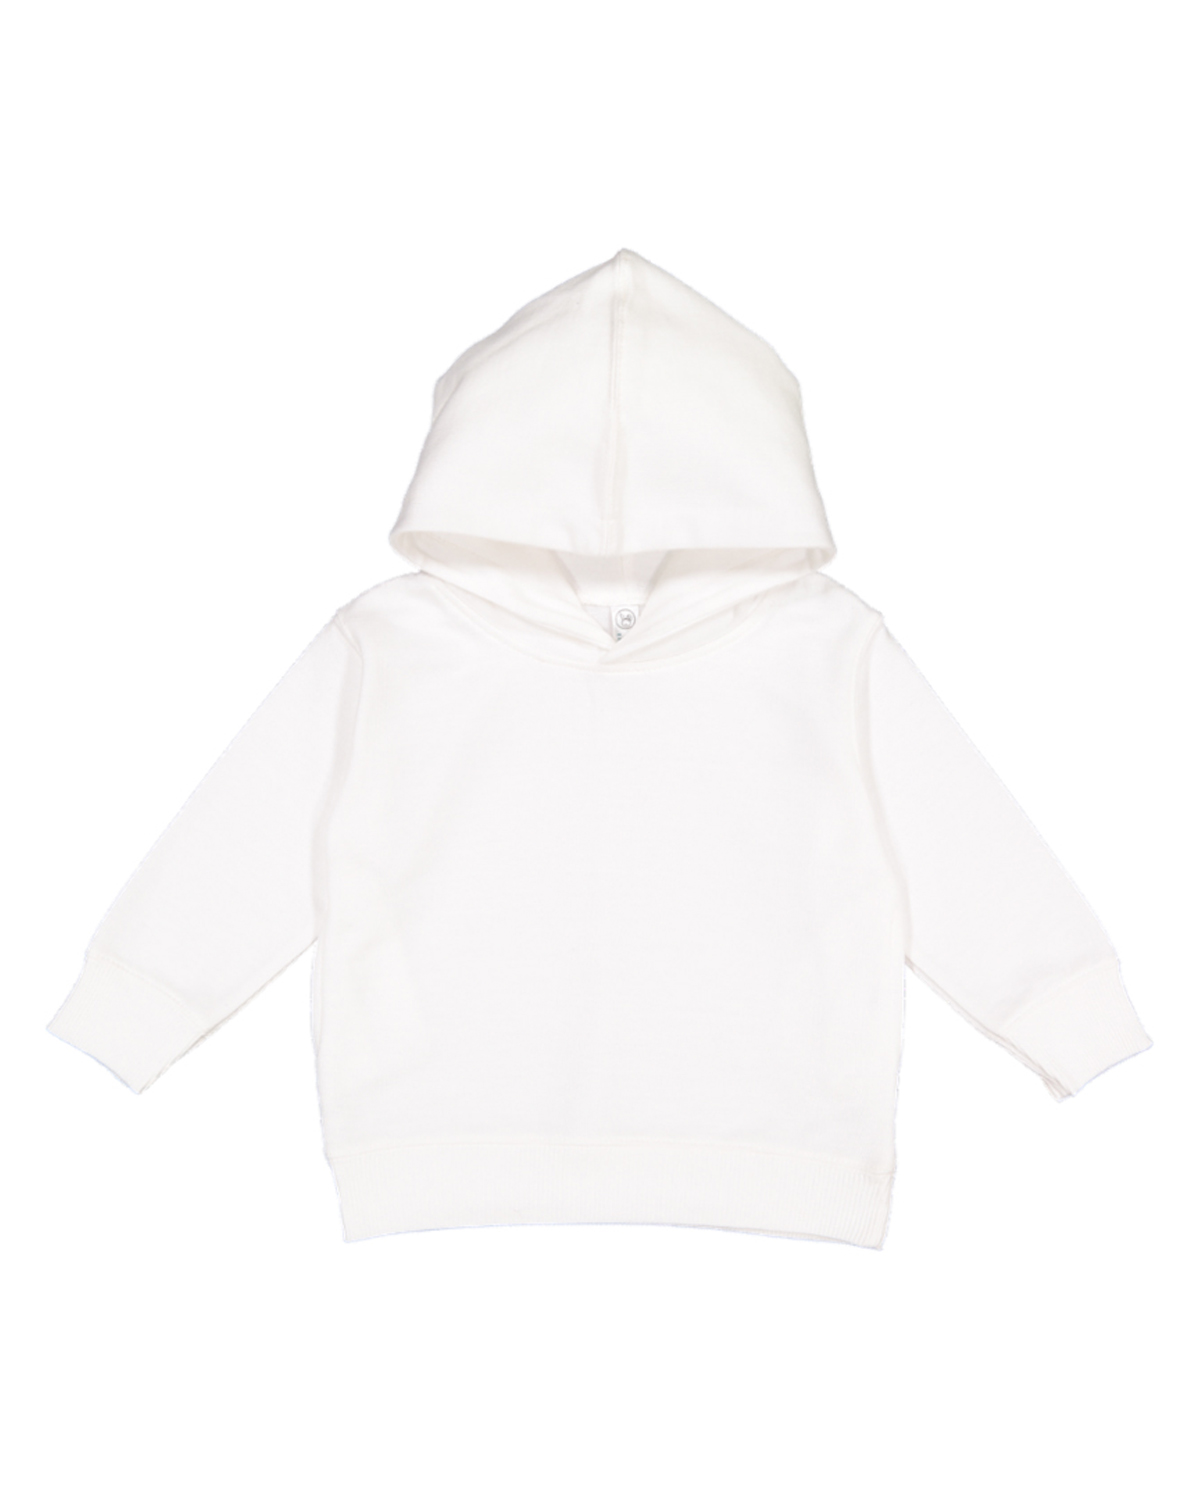 RABBIT SKINS Toddler Fleece Long Sleeve Hooded Pullover Sweatshirt with Side Seam Pockets